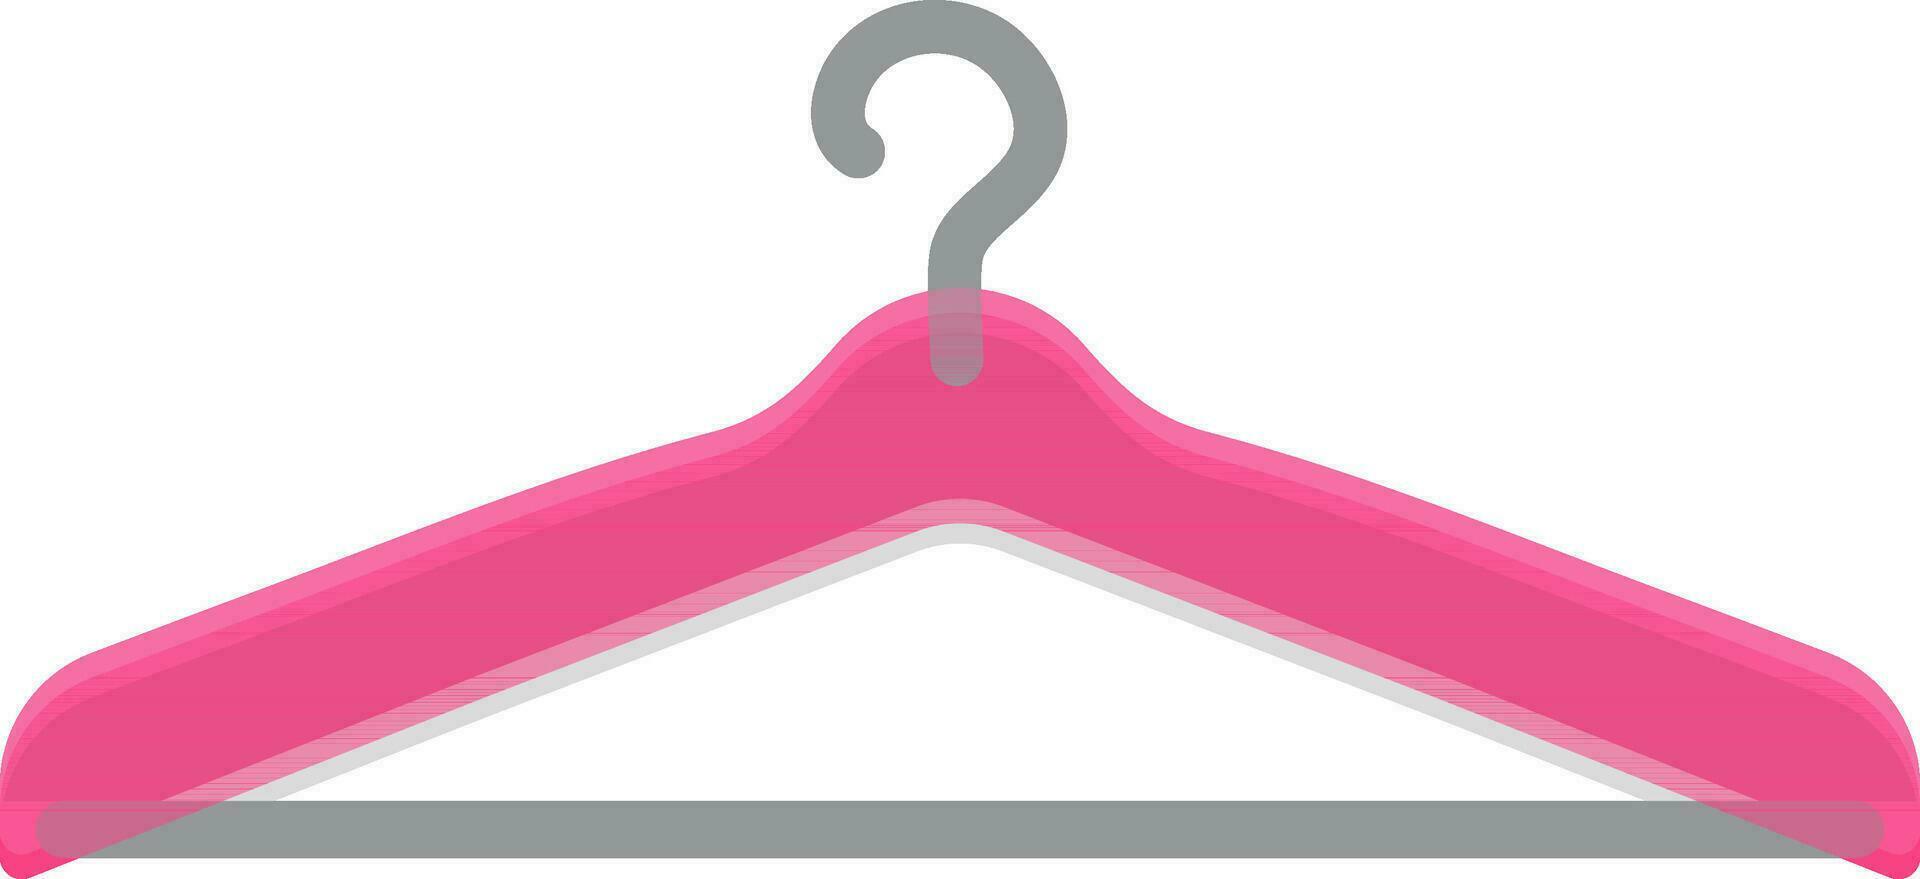 Pink and grey hanger symbol. vector